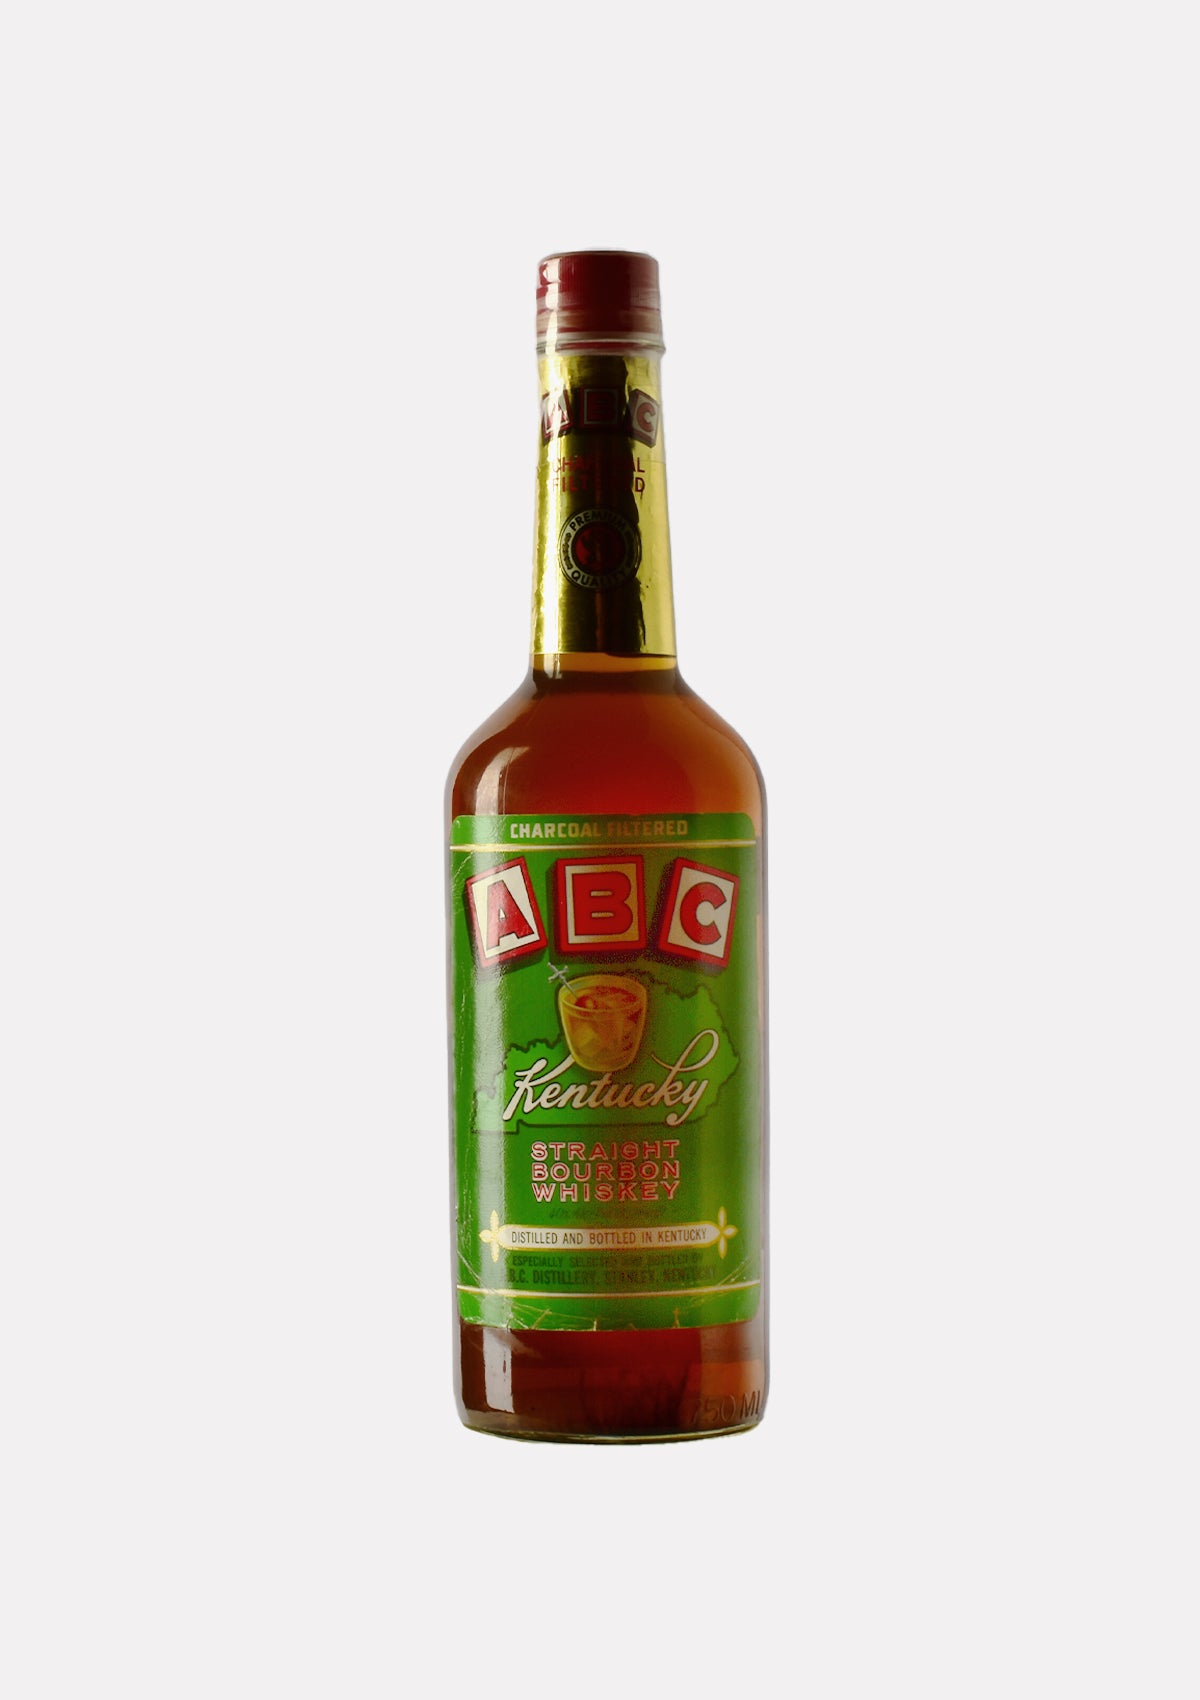 ABC Kentucky Straight Bourbon Whiskey